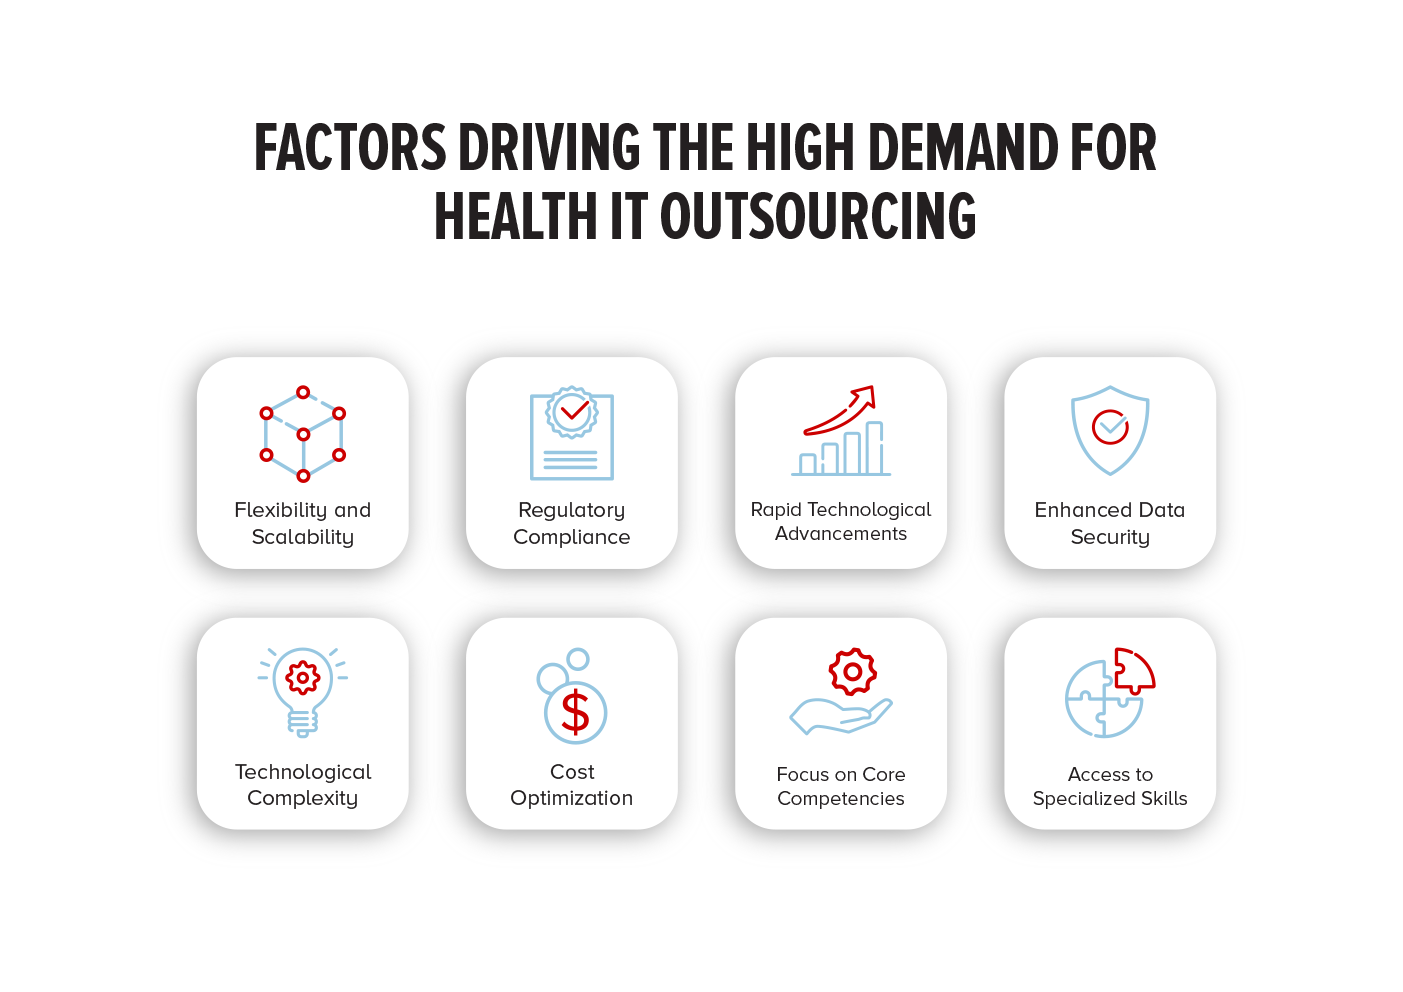 Health IT outsourcing factors